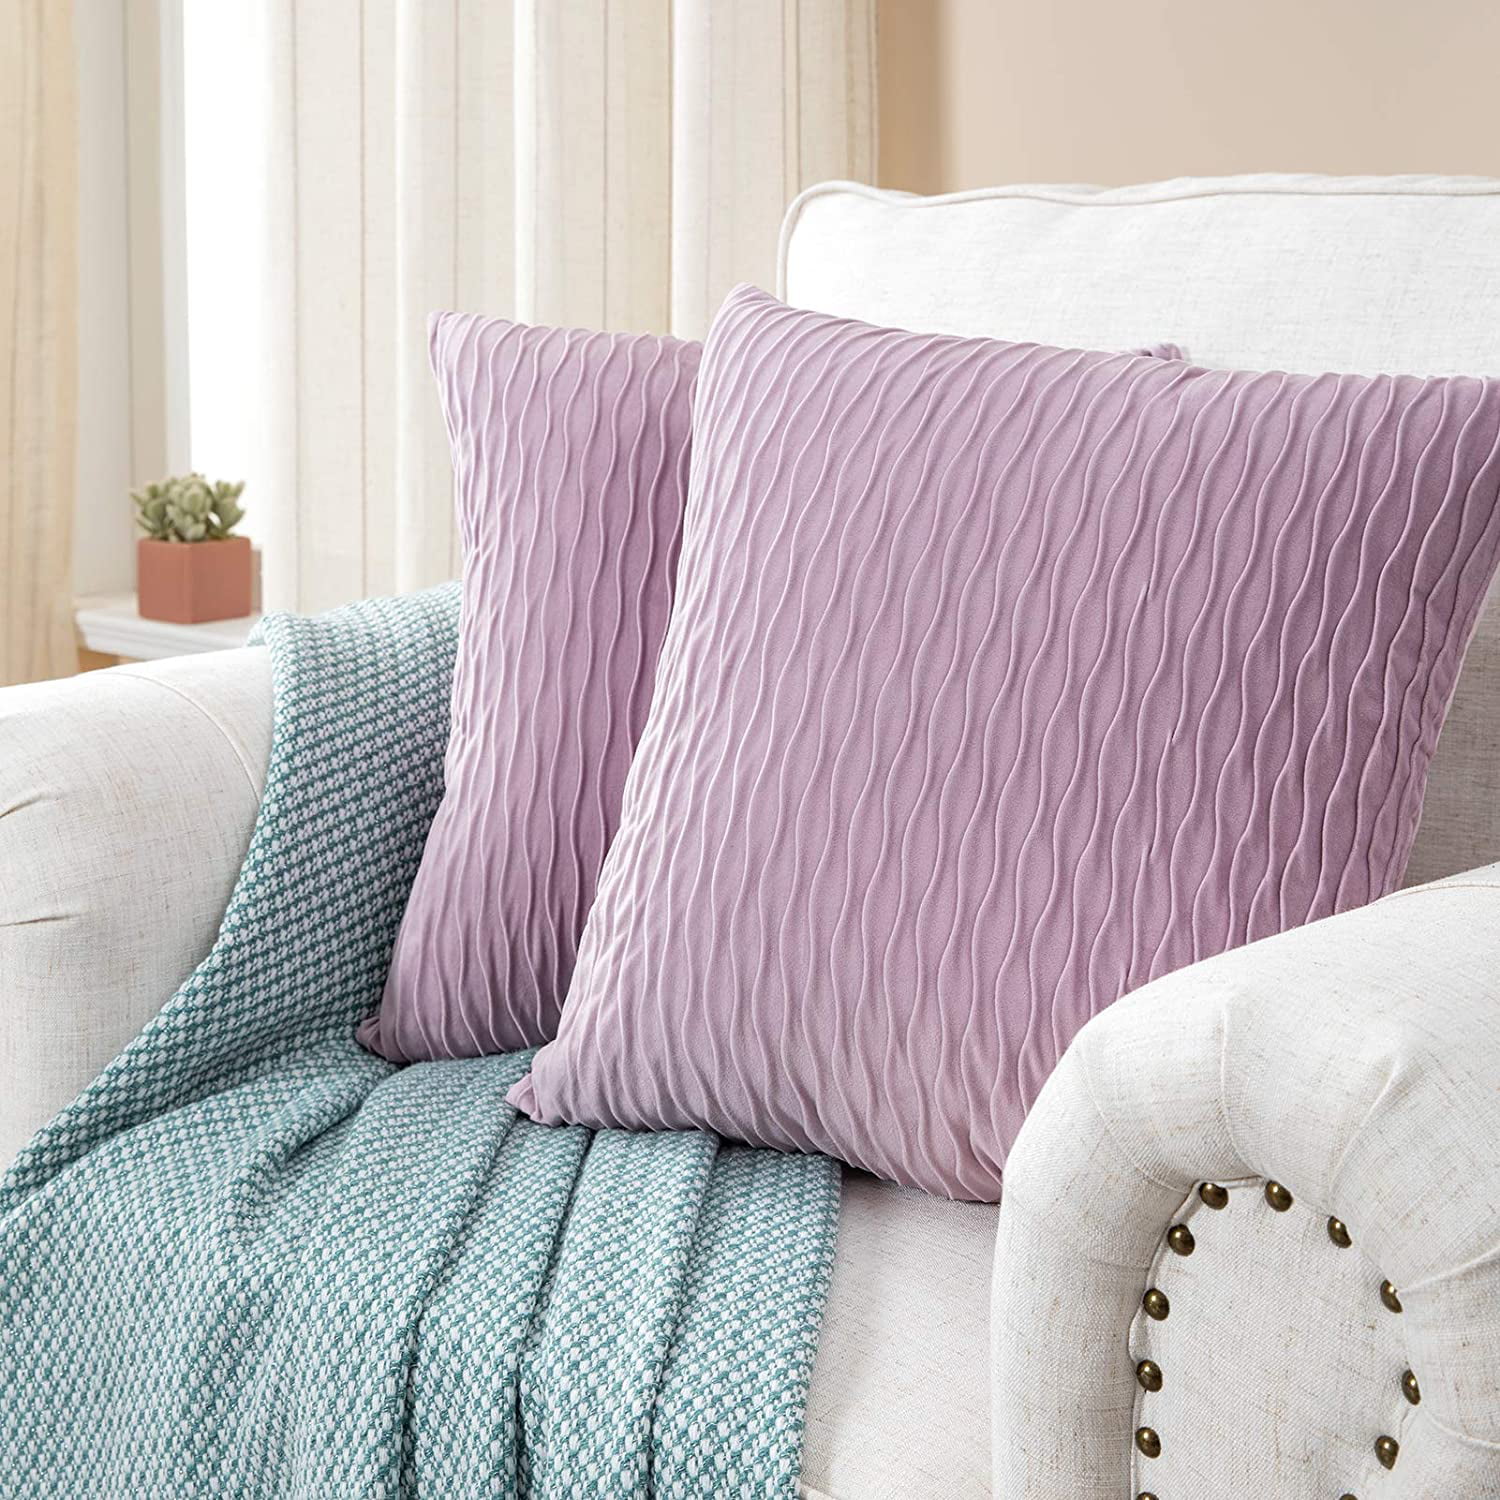 ZECATL Pink Pillow Covers for Throw Pillows 18×18 Inch